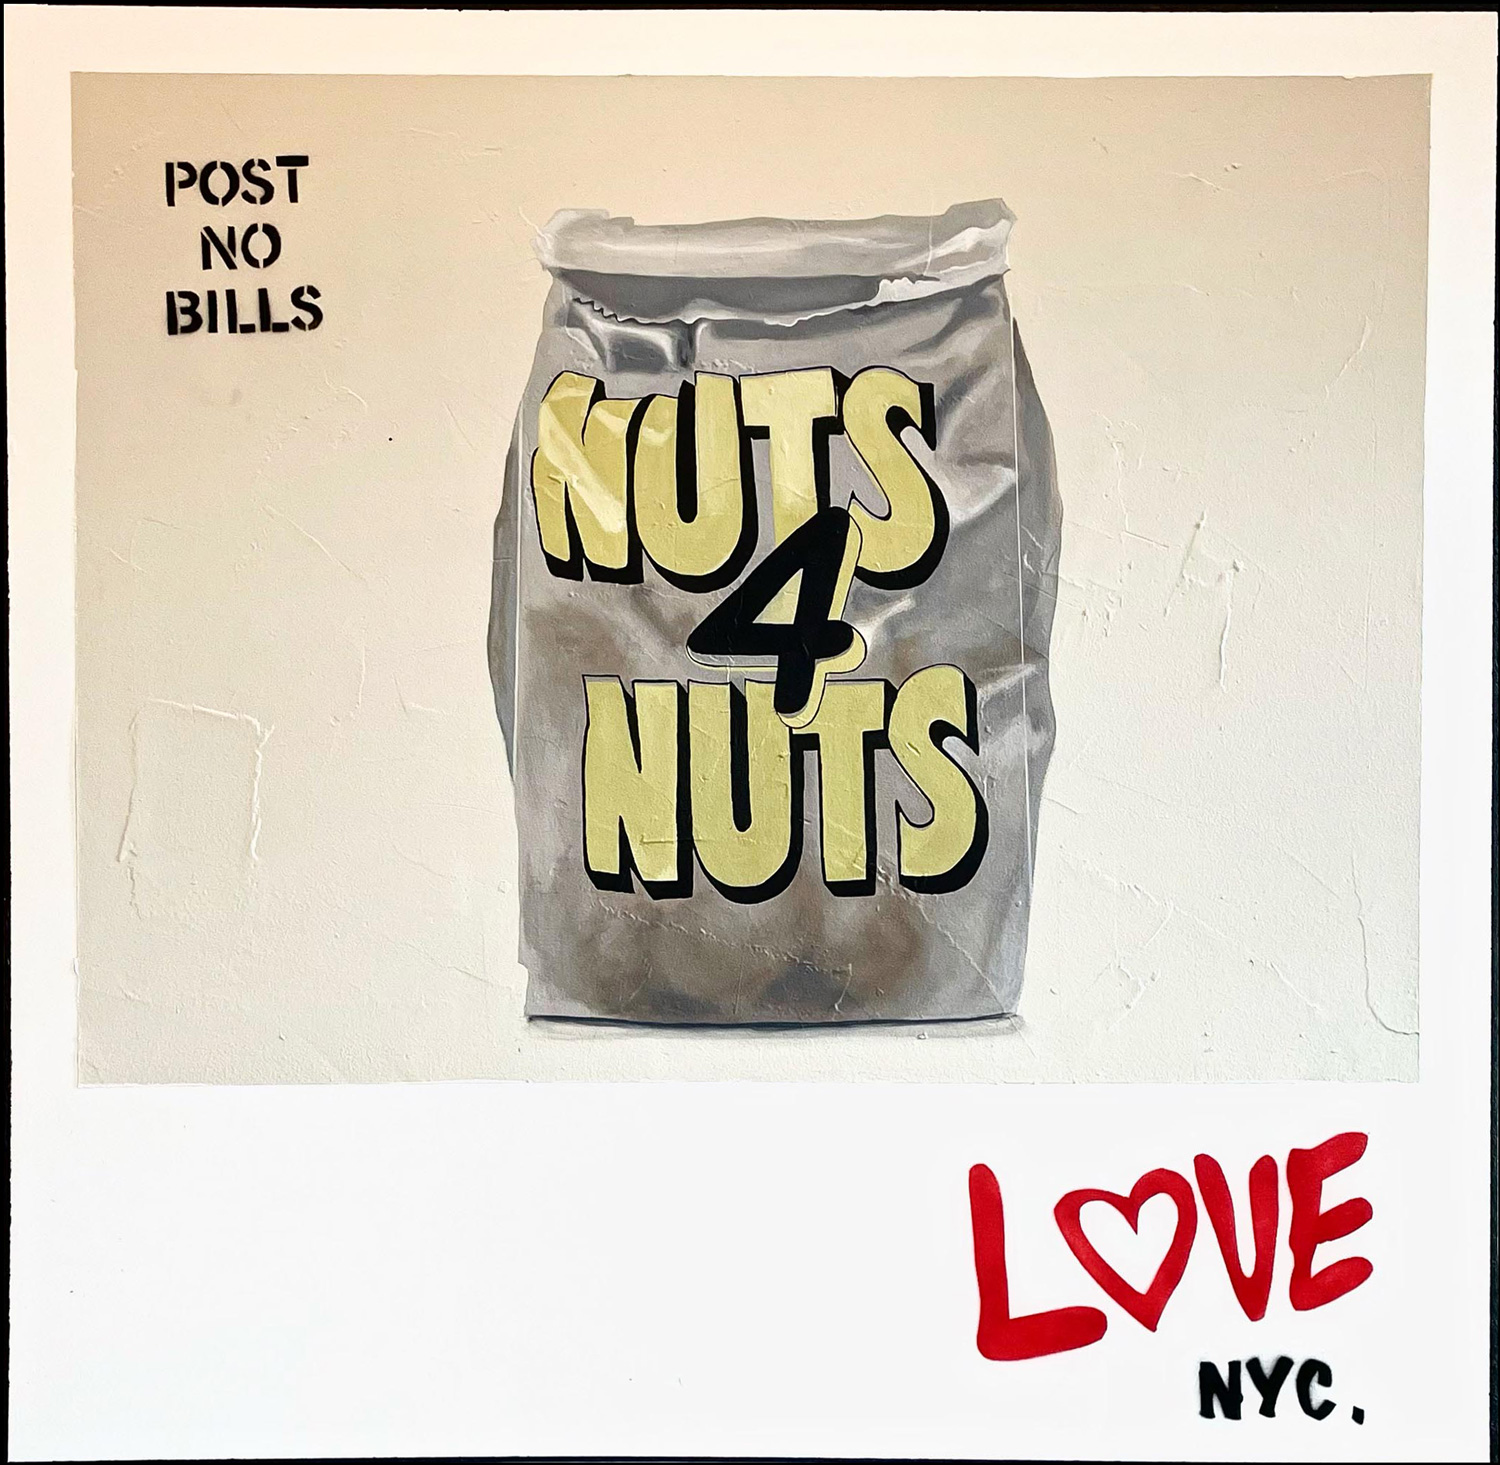 Nuts 4 nuts